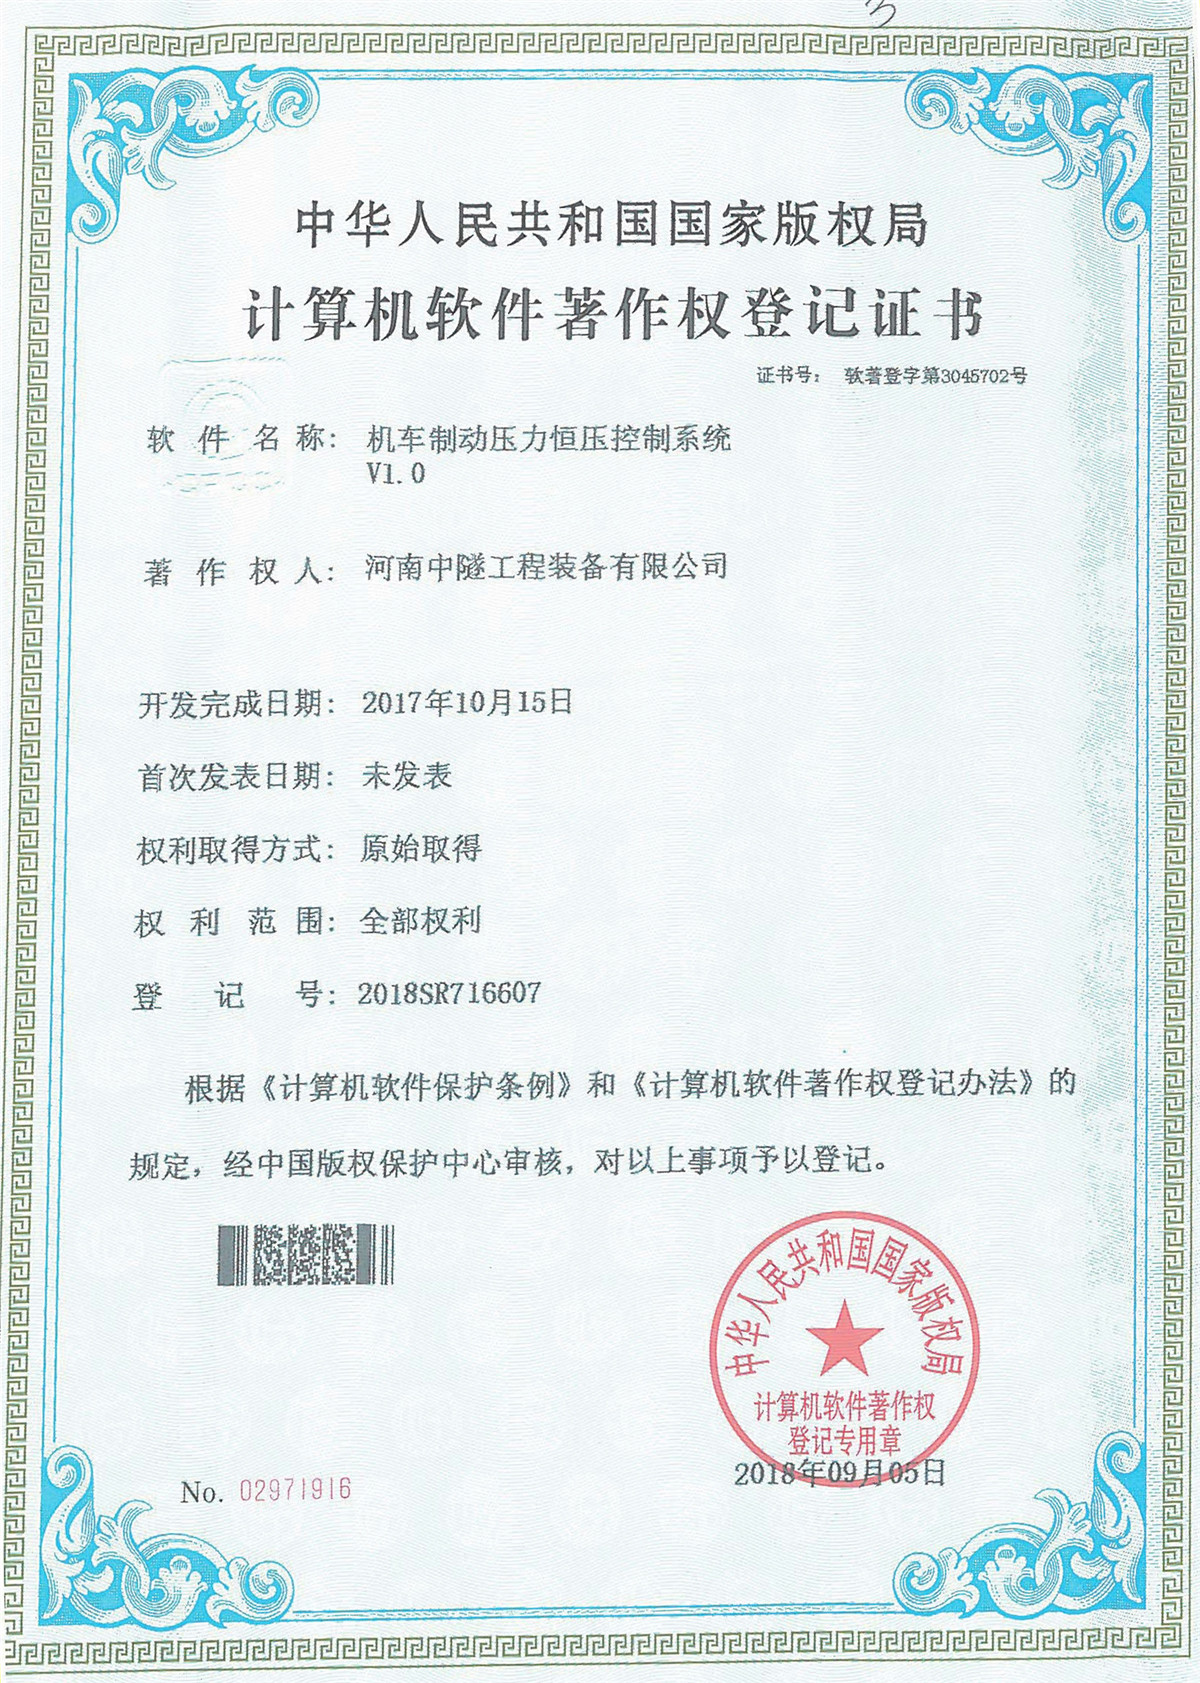 Registration Certificate Of Locomotive Brake Pressure Constant Pressure Control System